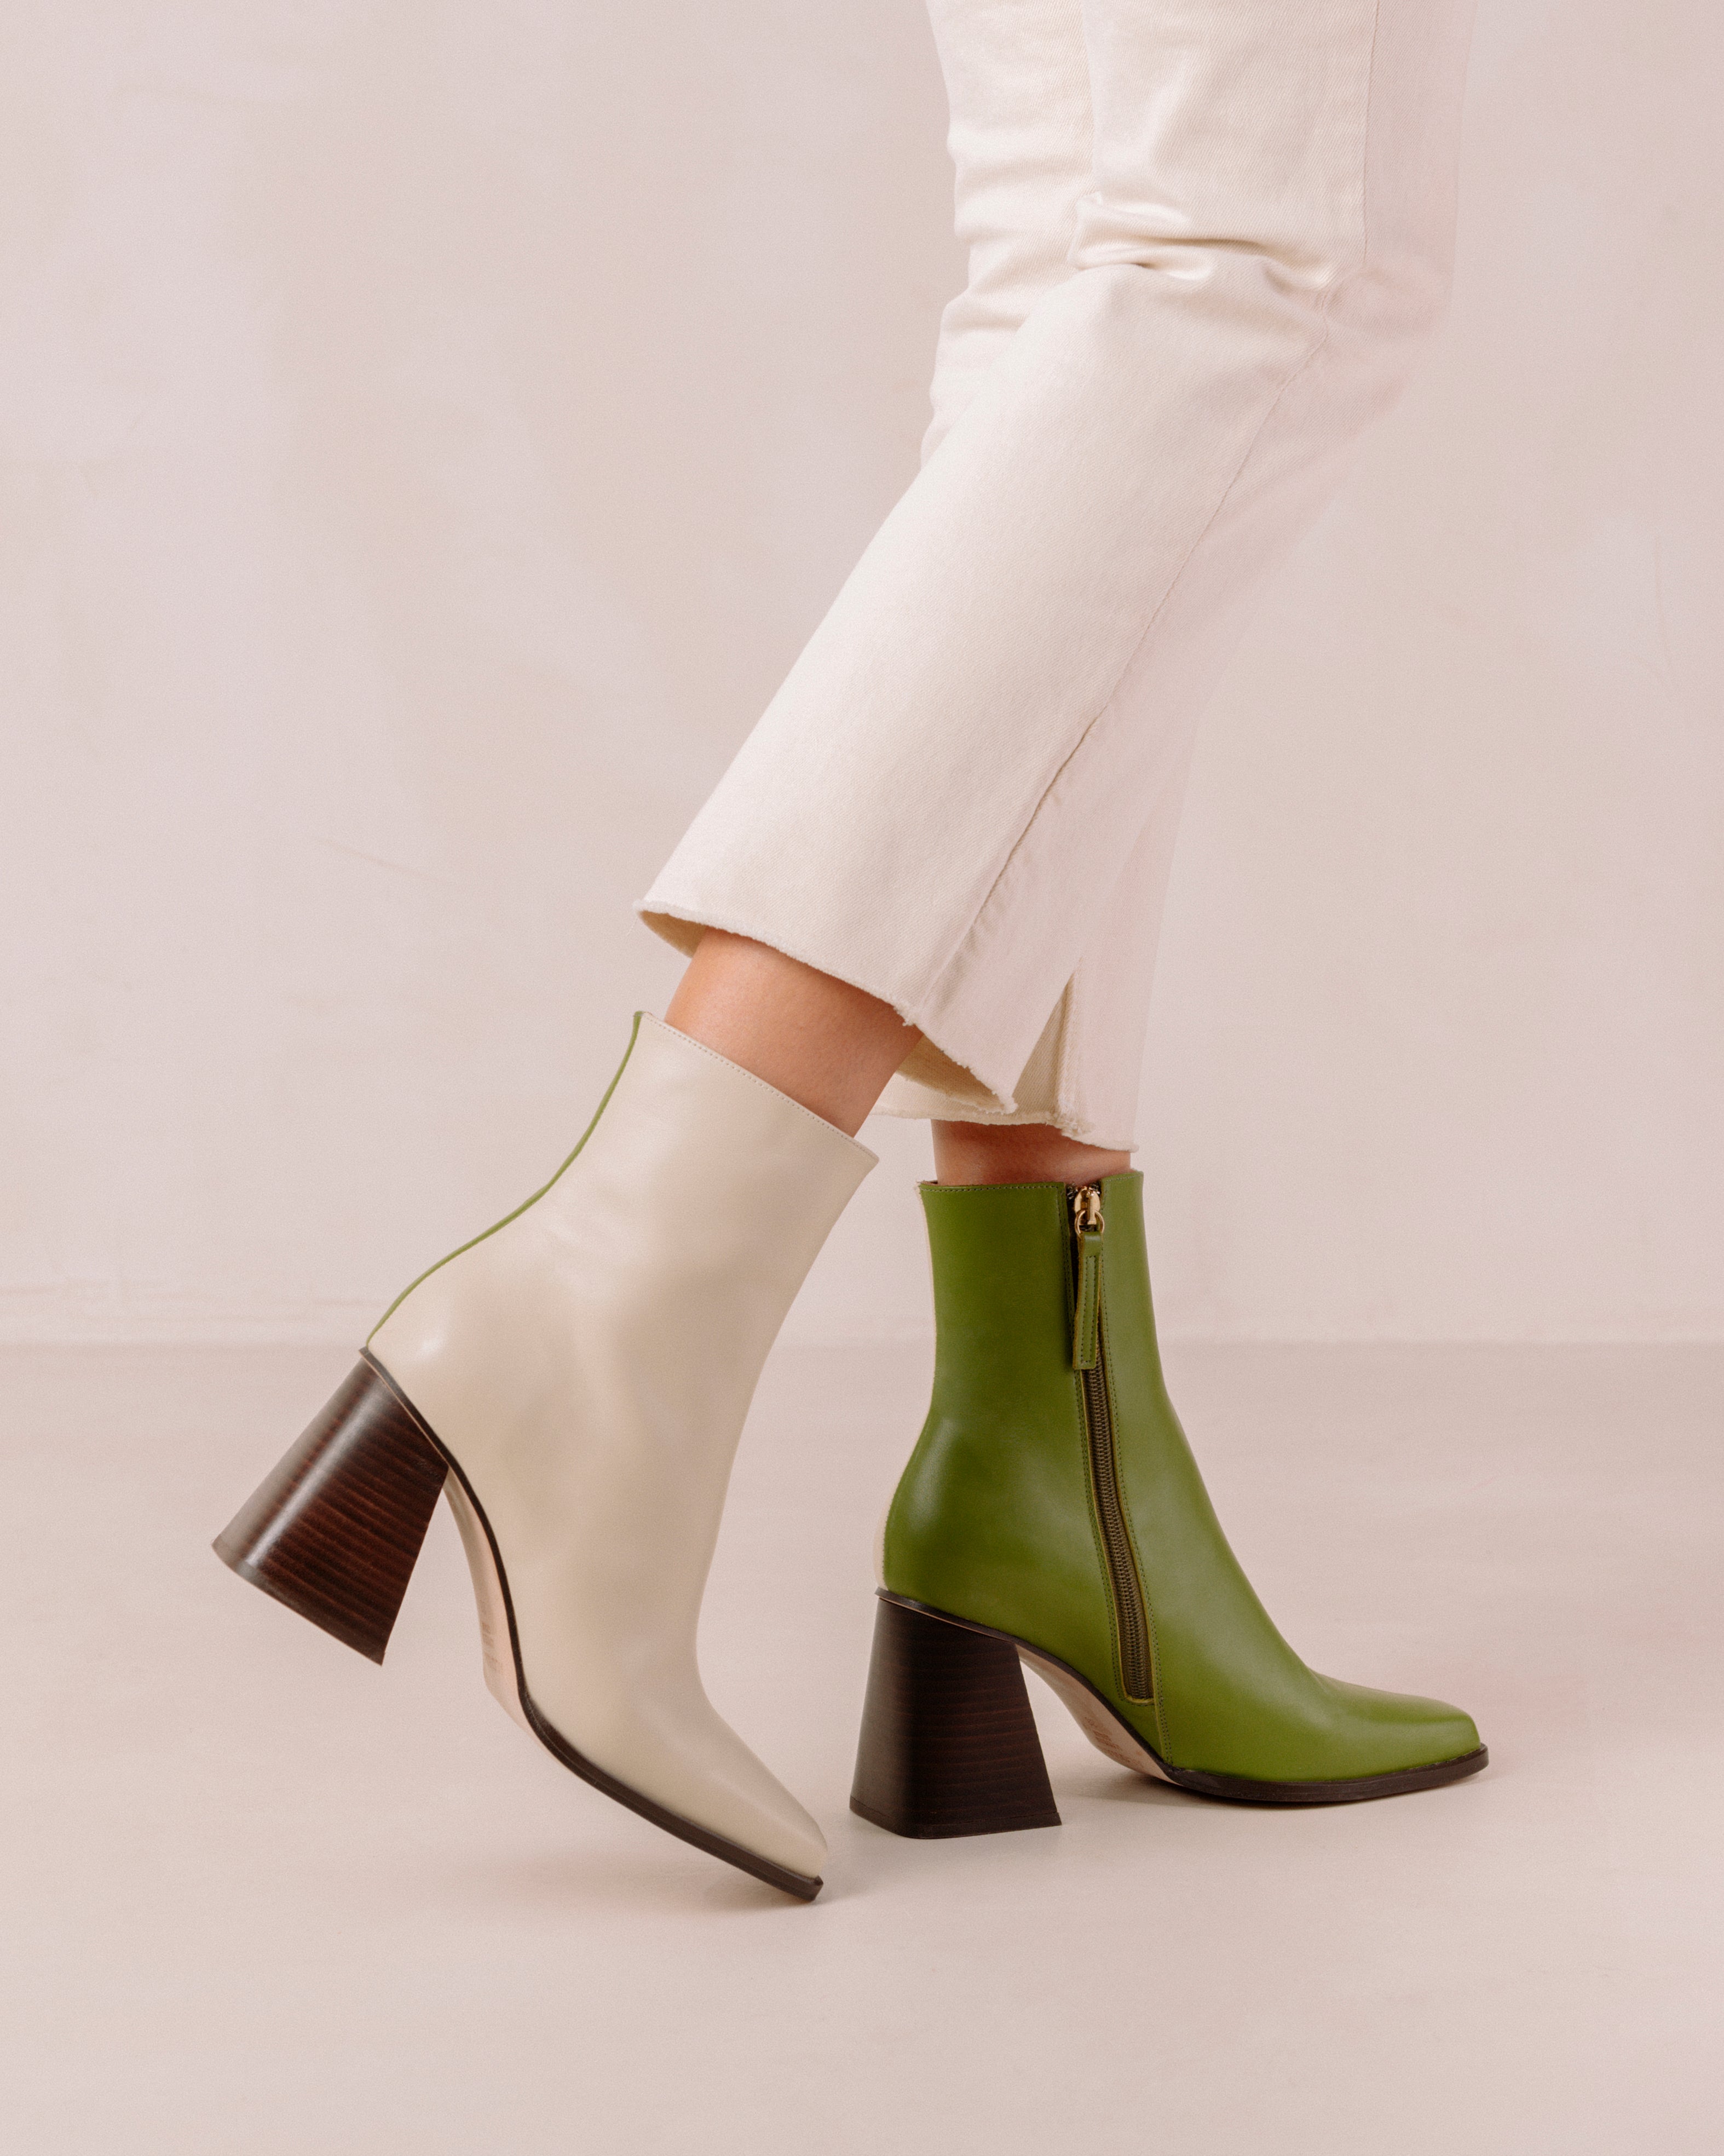 south-bicolor-evergreen-cream-ankle-boots-alohas-865540_6720d323-2197-4386-b0bb-0b90245beb1d.jpg